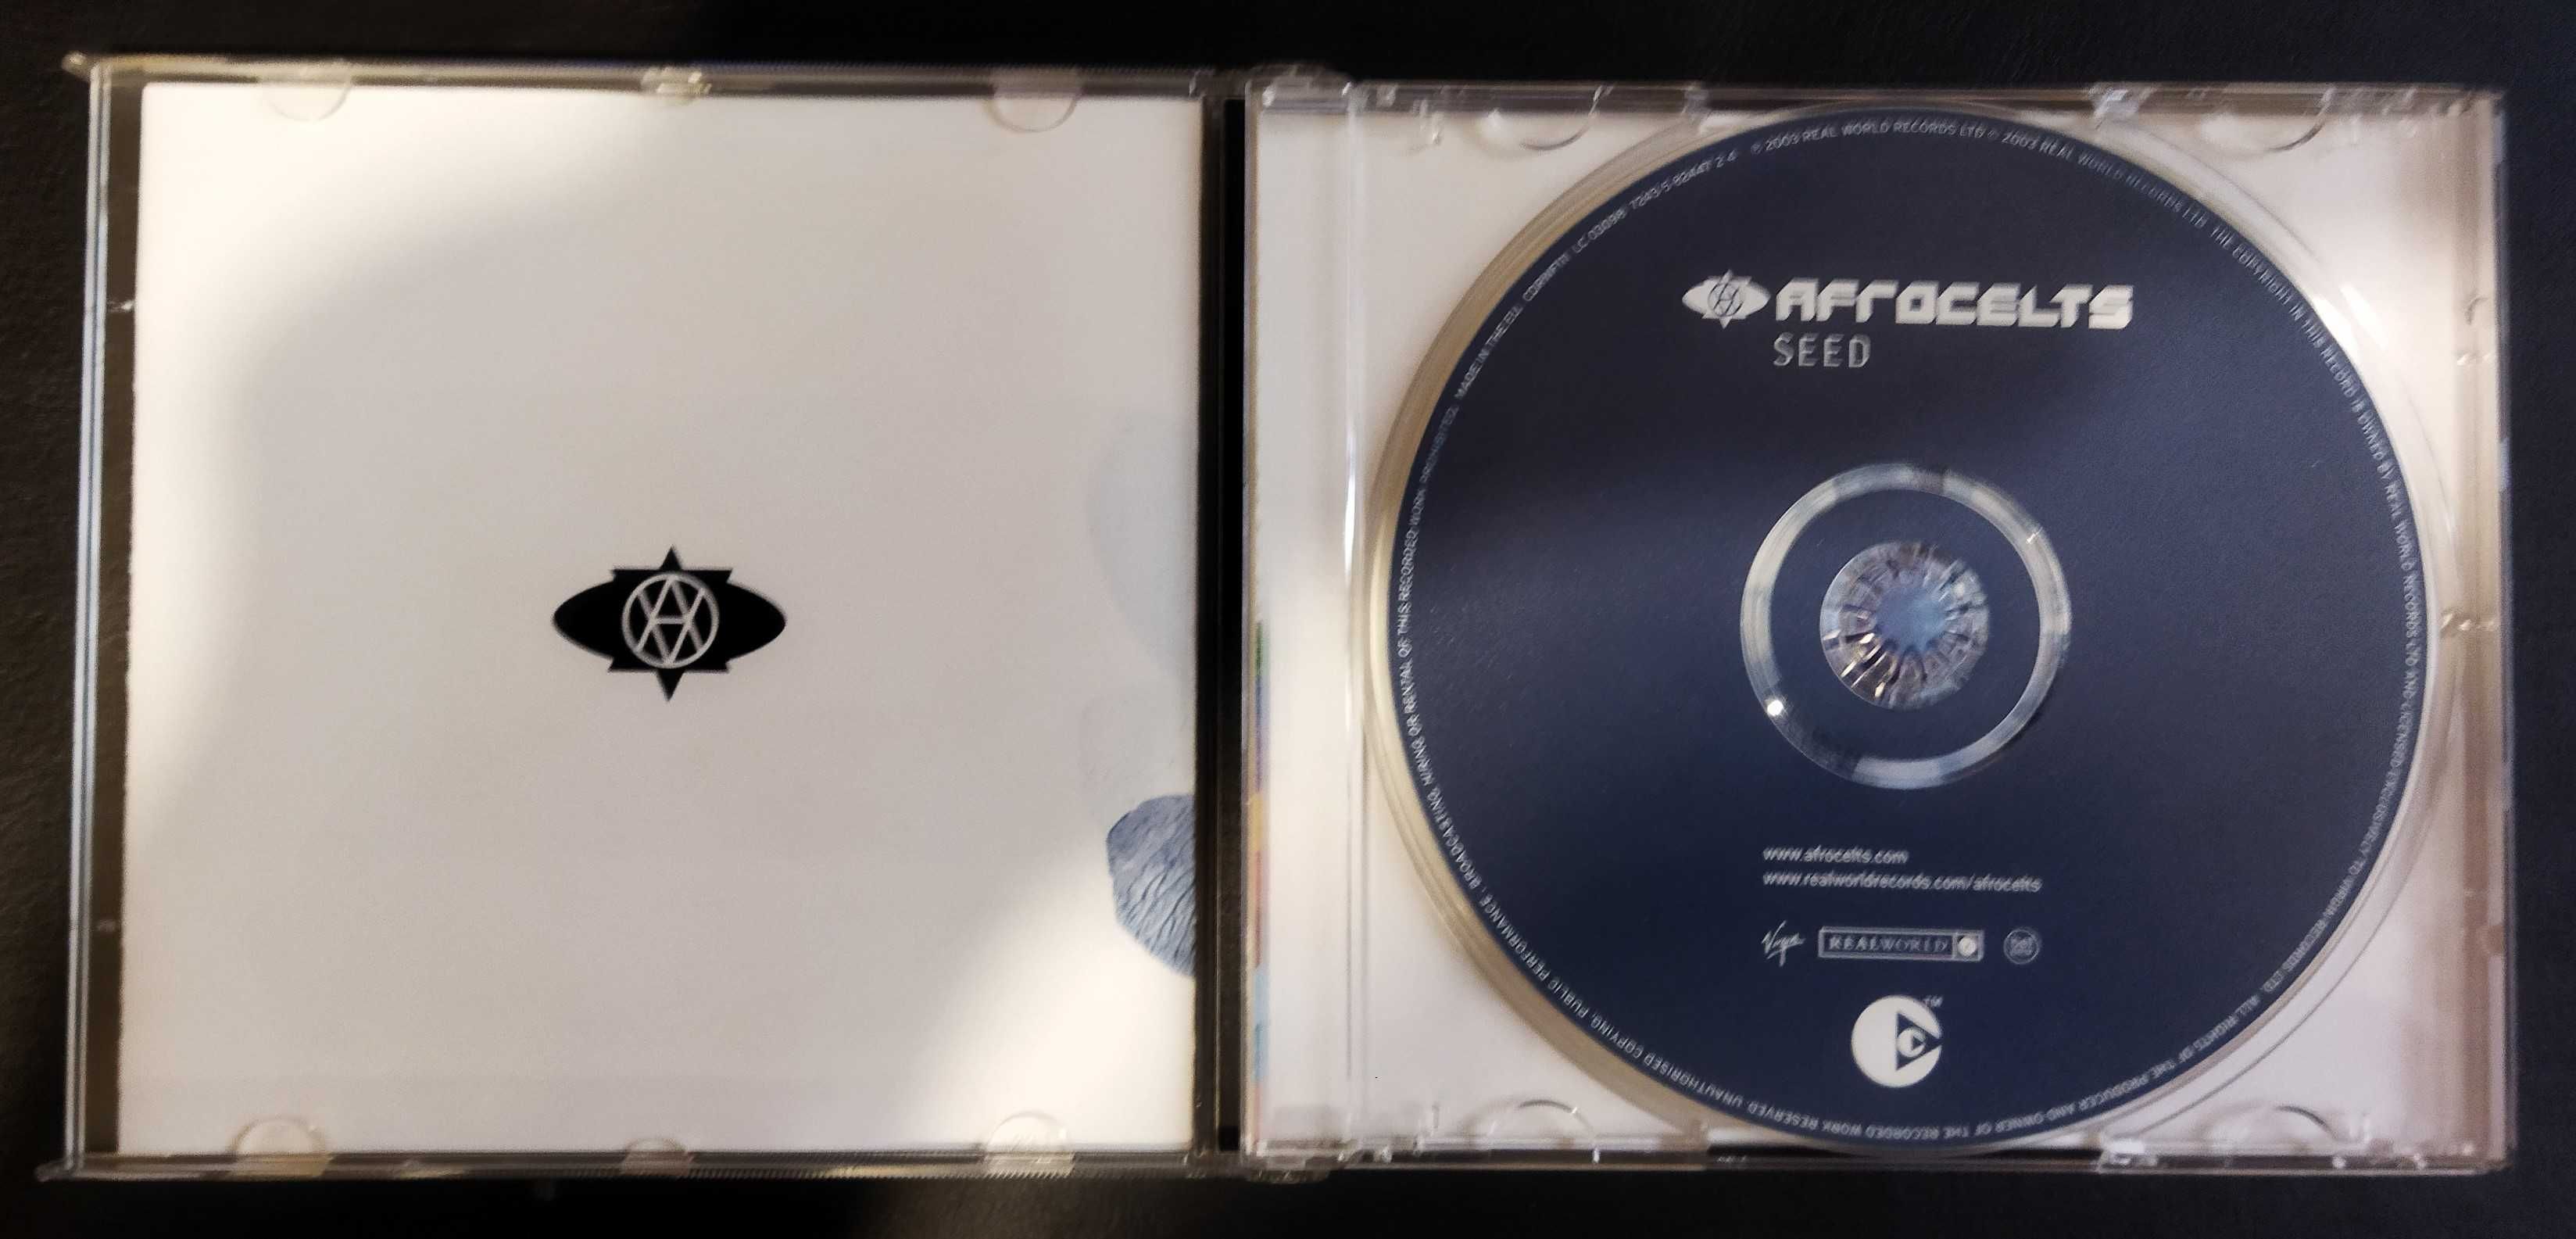 Płyta CD "See" zespołu AFROCELTS (rock elektroniczny)